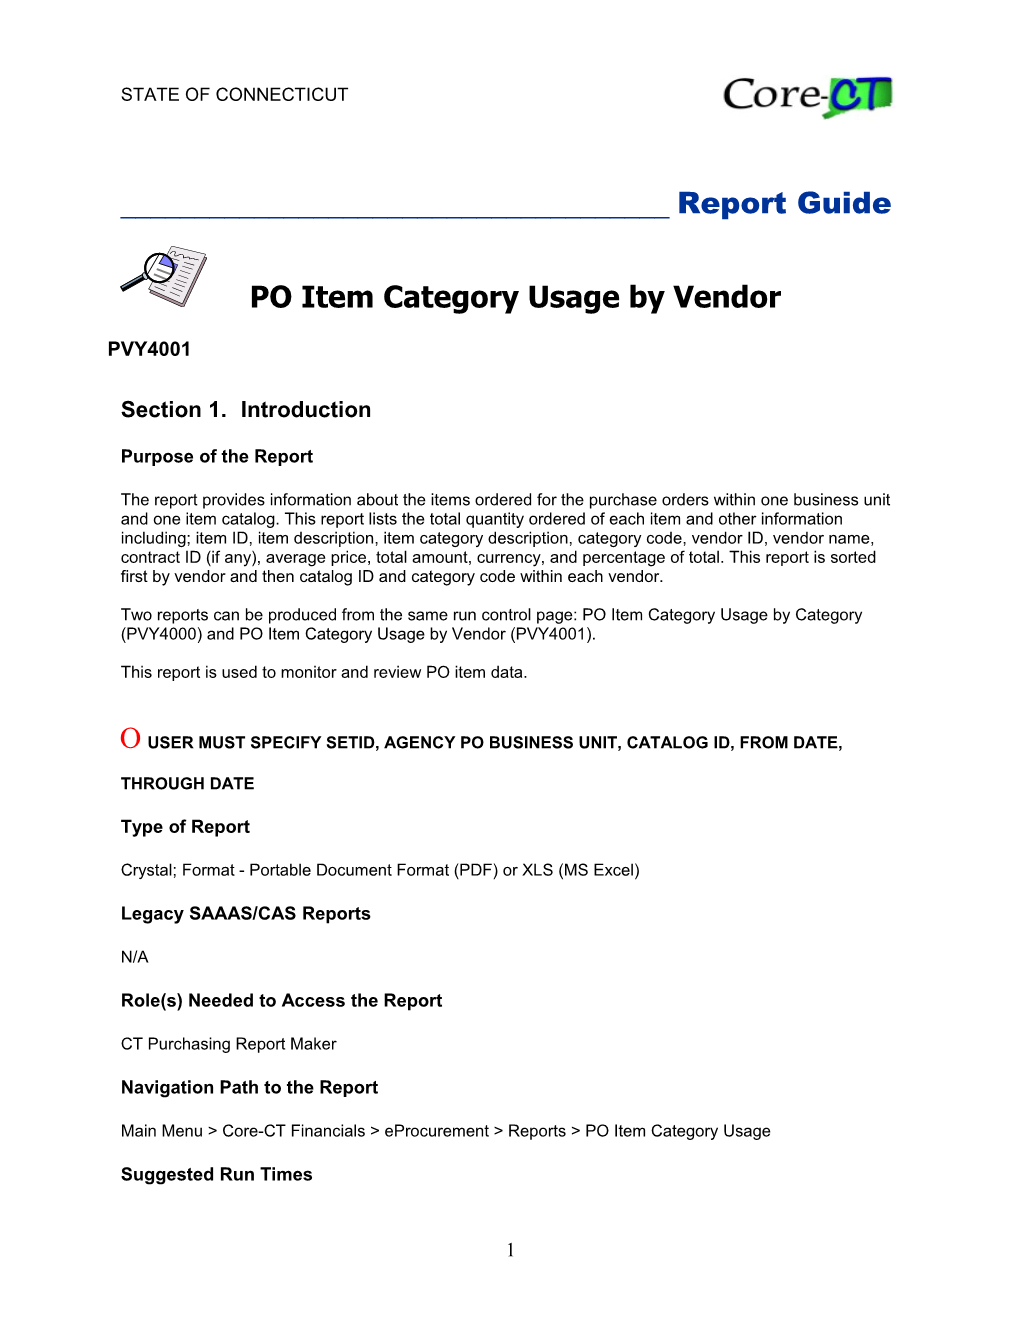 PO Item Category Usage by Vendor (PVY4001)